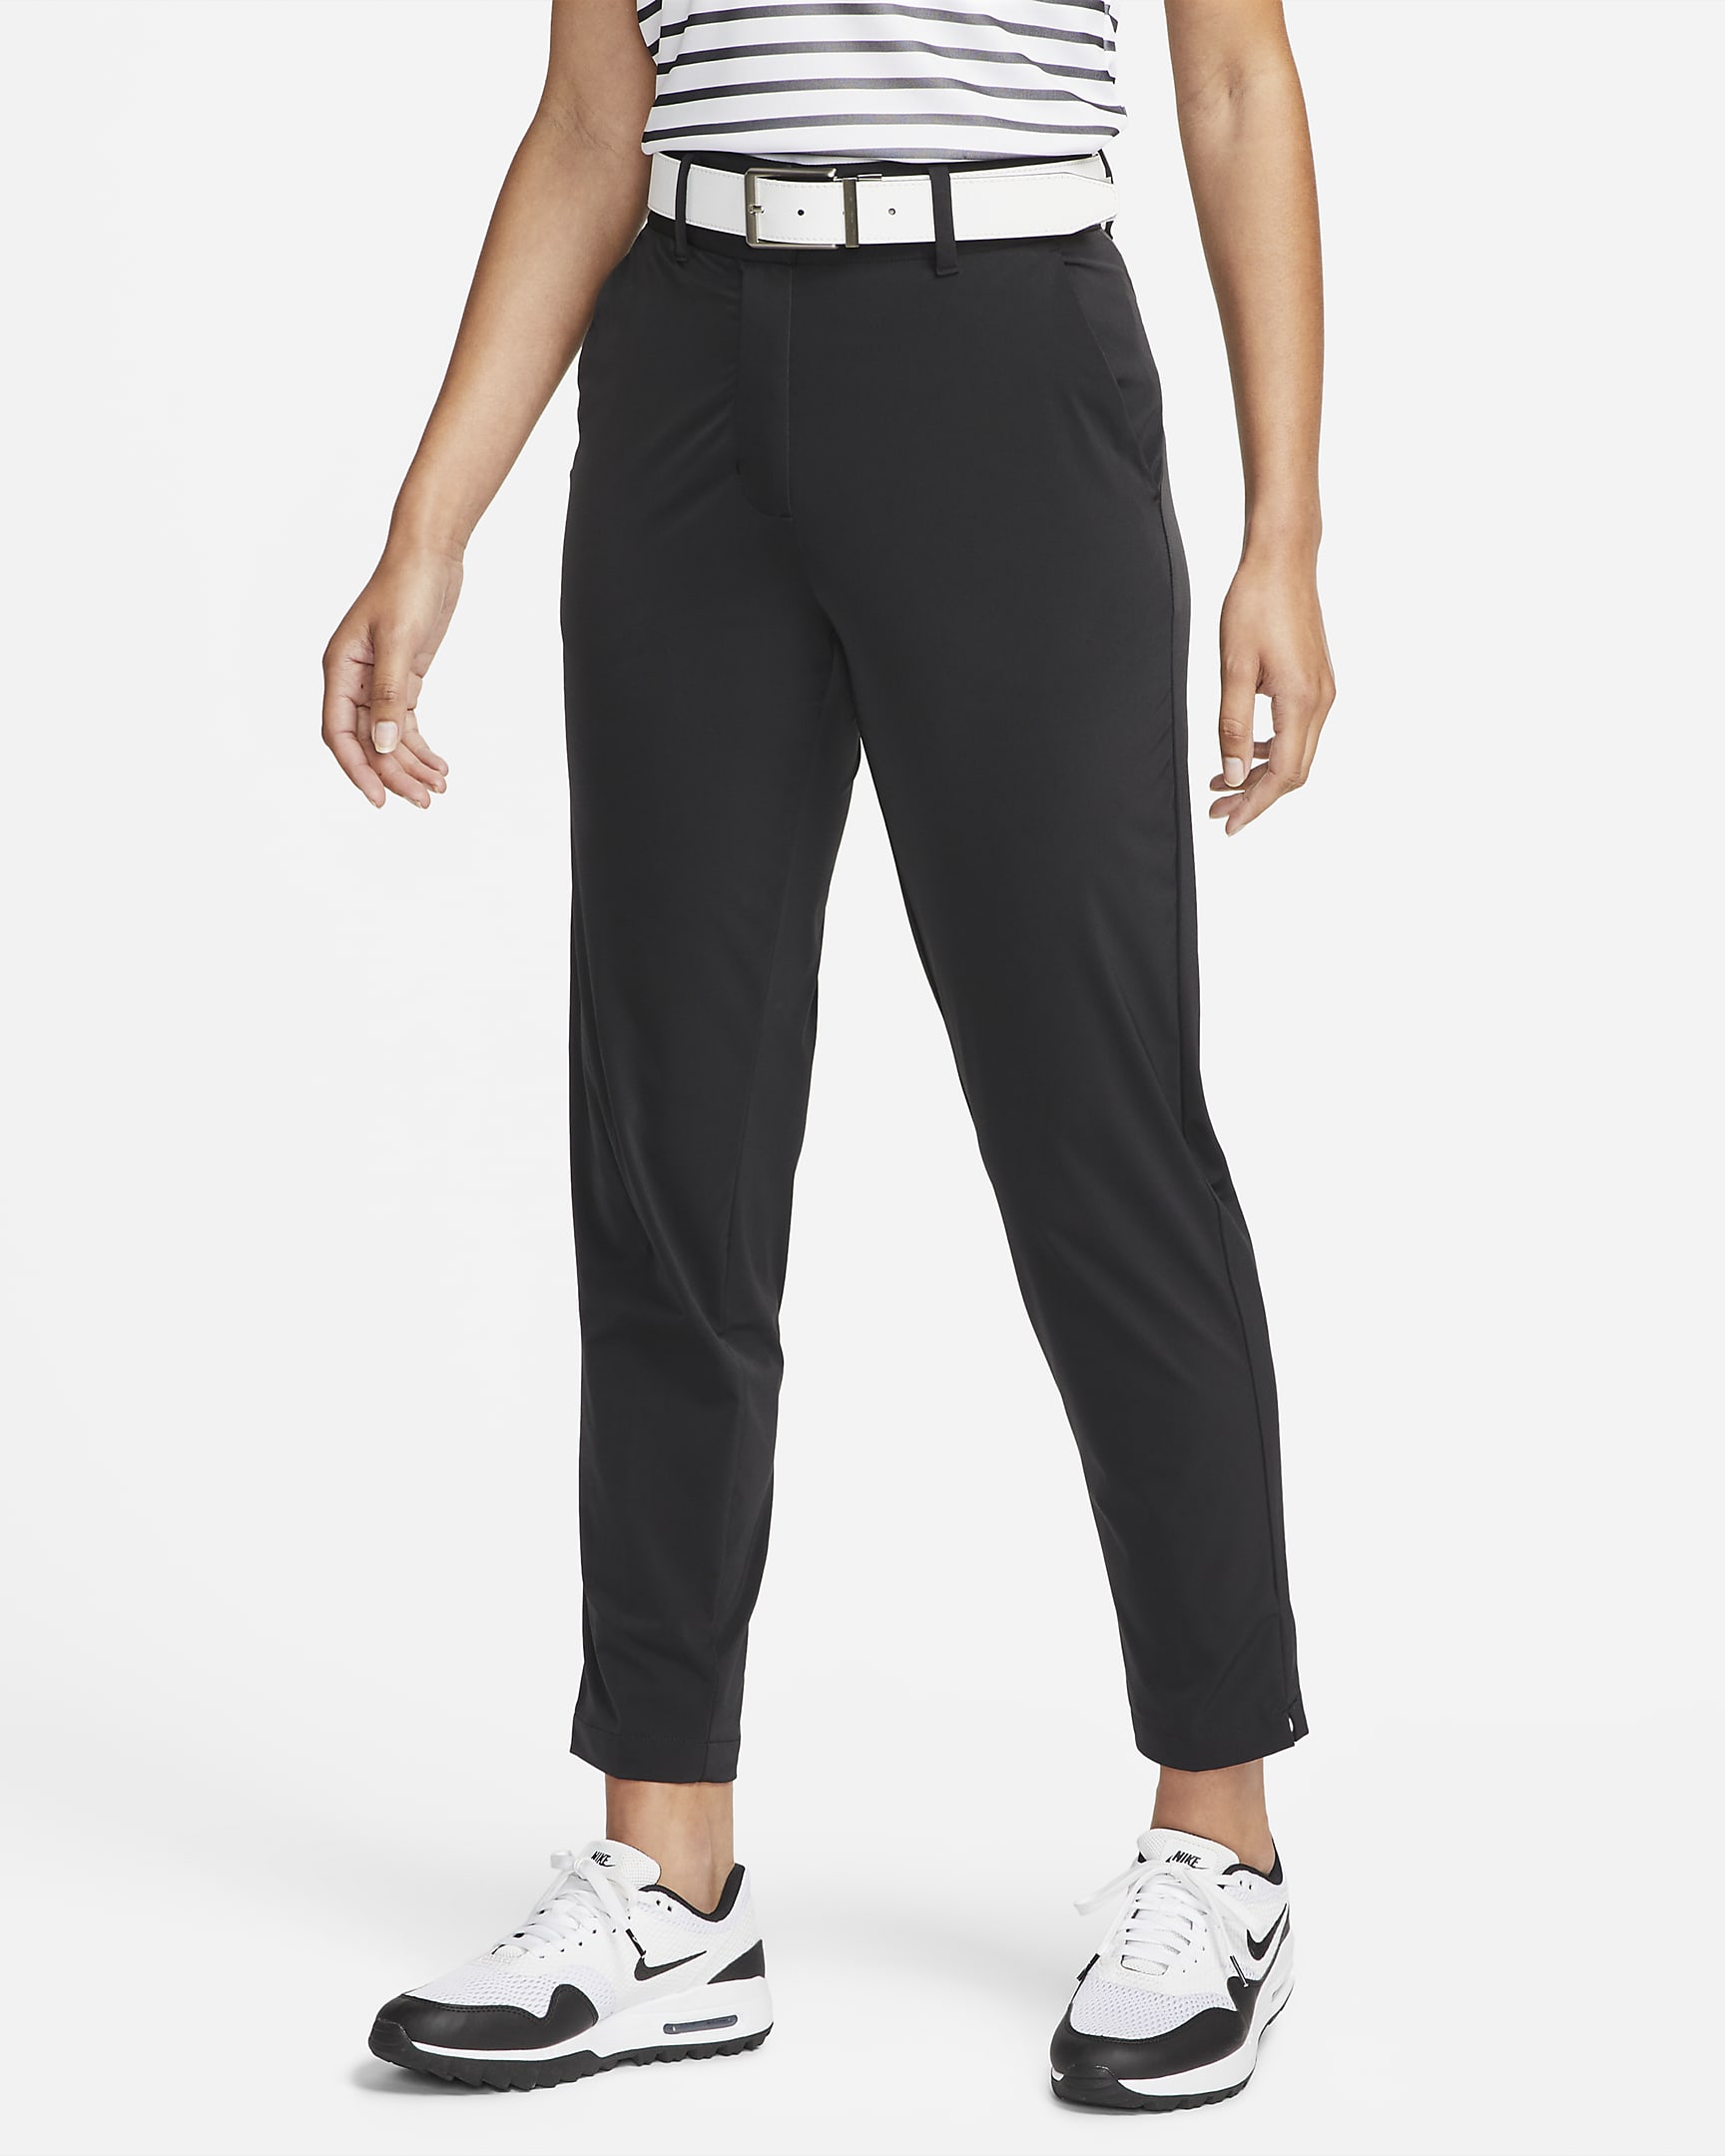 Nike Dri-FIT Tour Women's Golf Trousers - Black/White